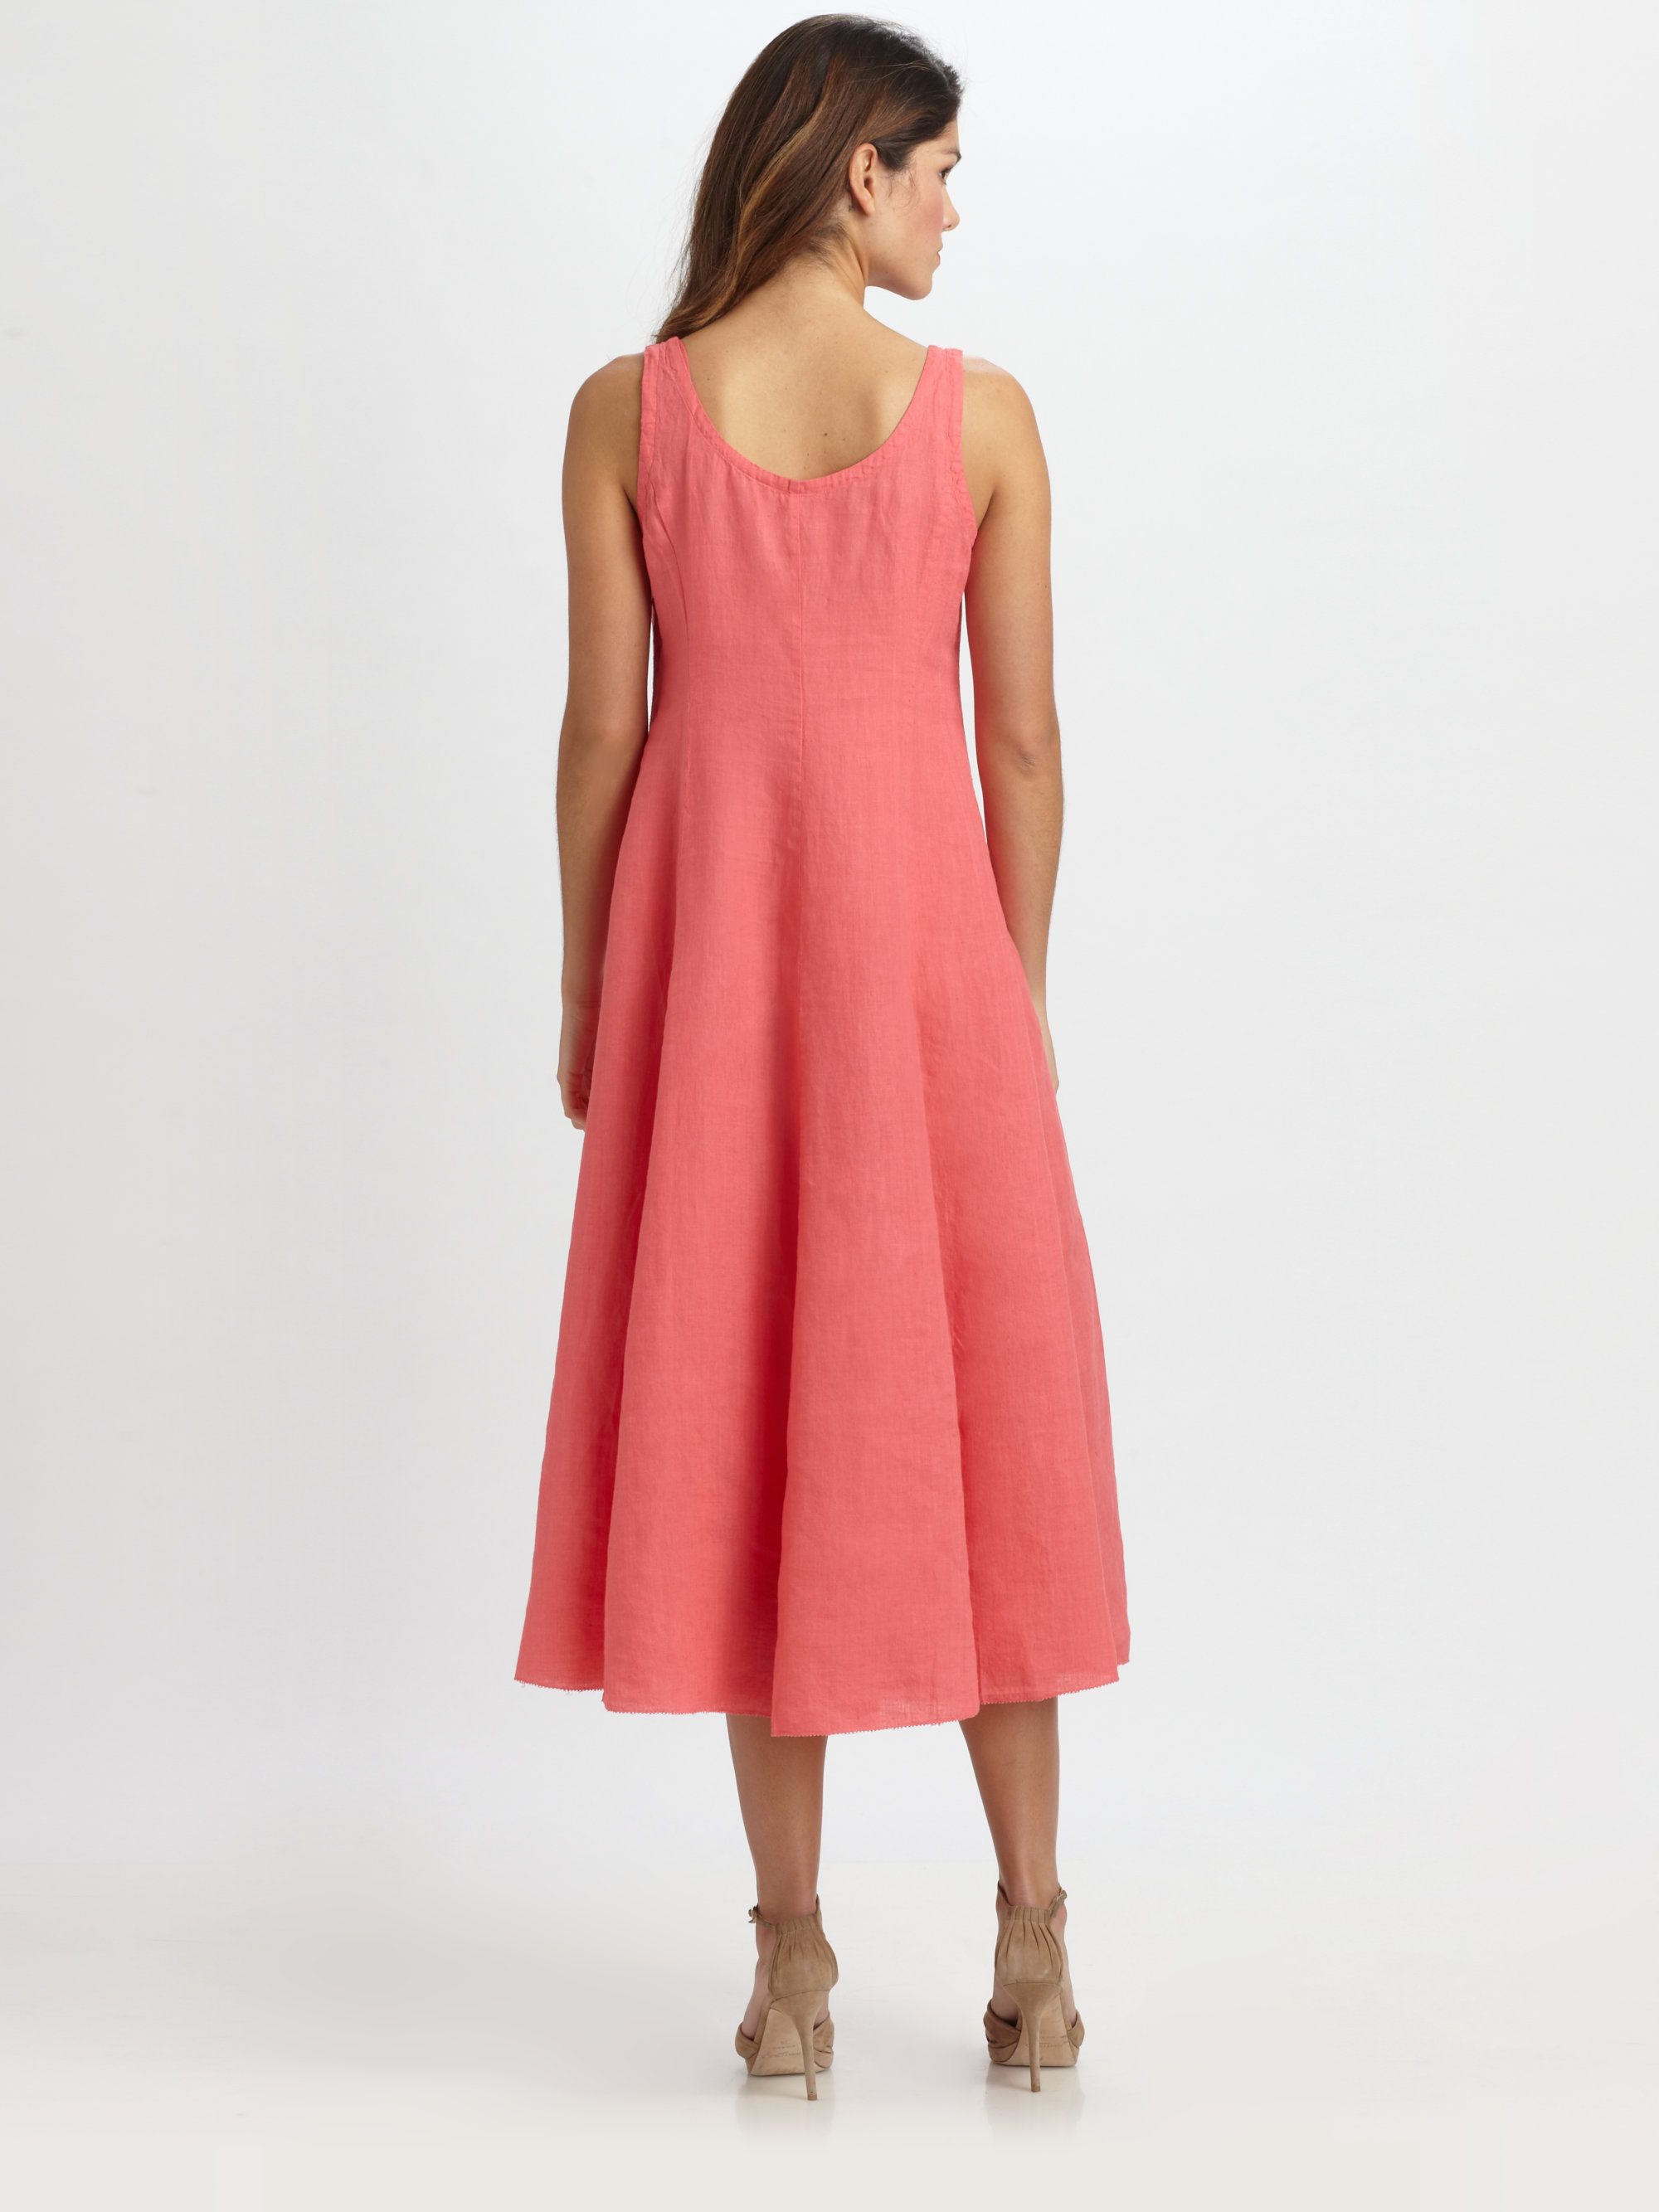 Eileen Fisher Sleeveless Linen Dress in Red | Lyst